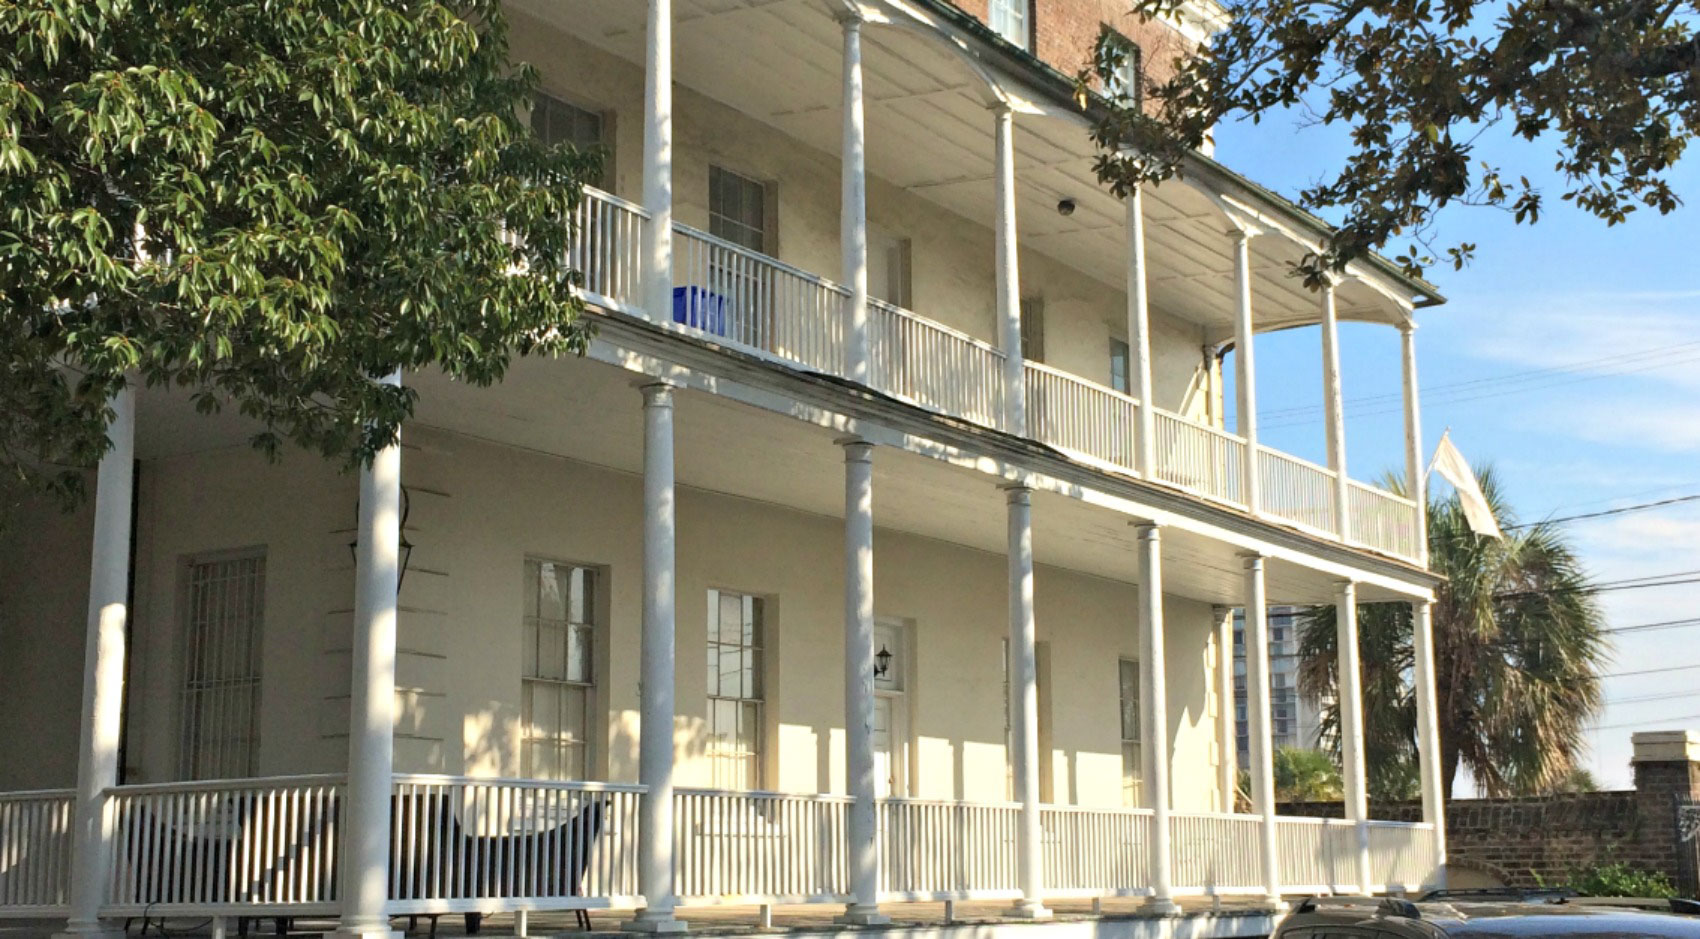 Gadsden House Piazza in Charleston SC 